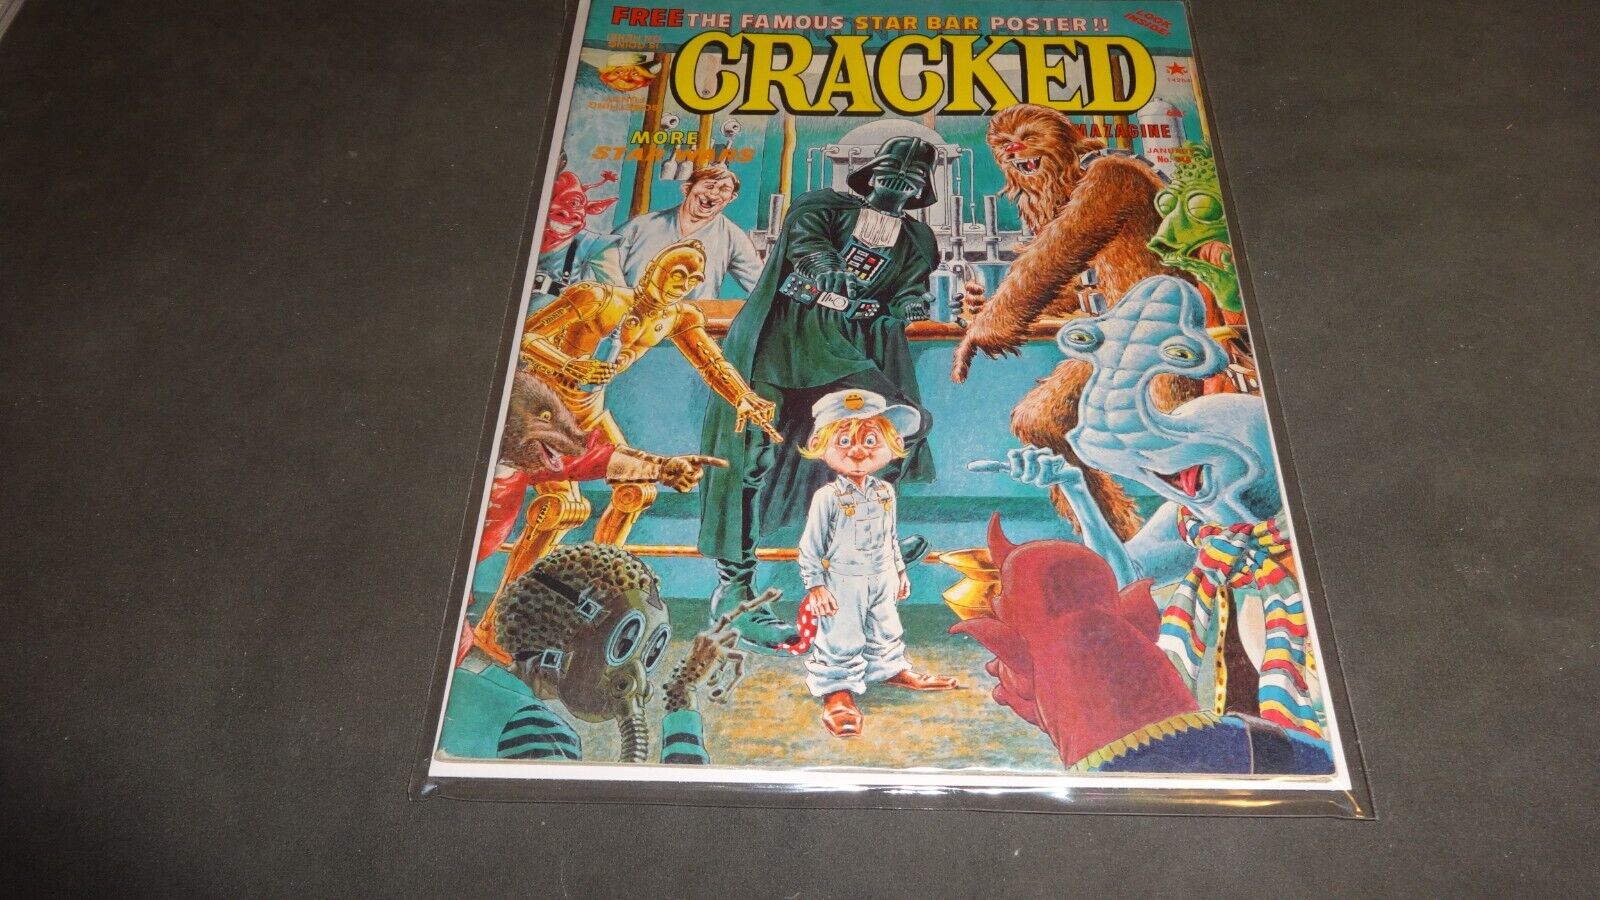 Cracked Magazine # 148 Star Wars January 1978 Star Bar Poster